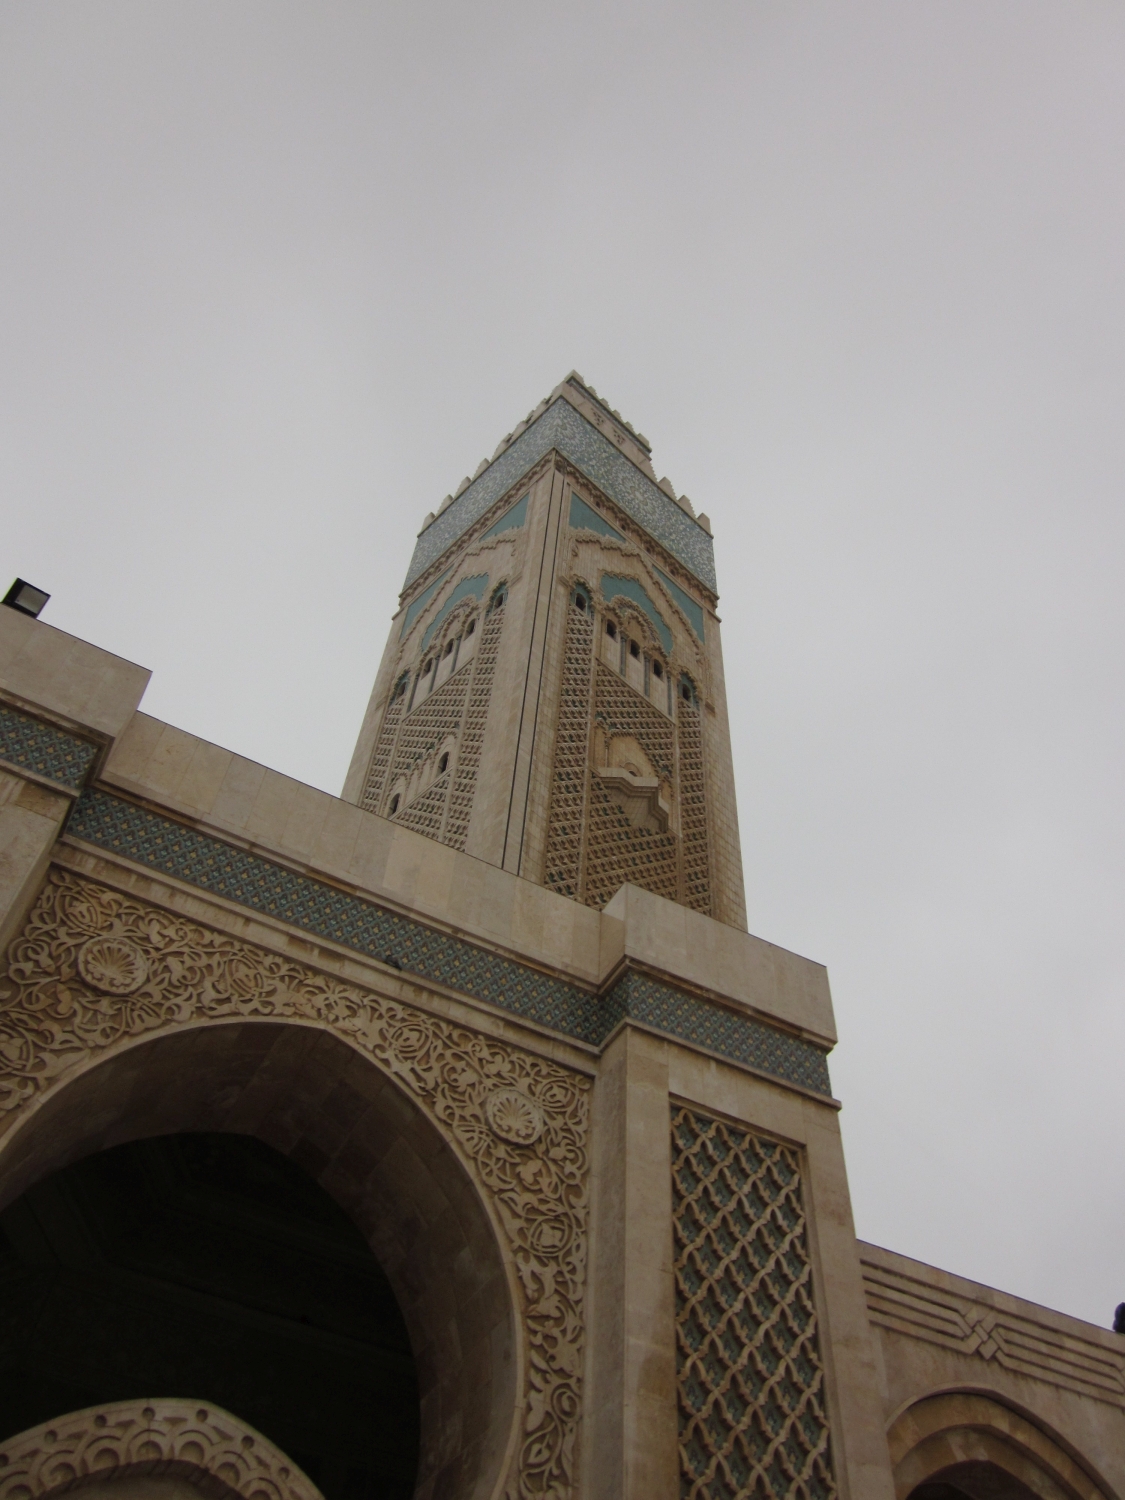 Partial upwards view of minaret